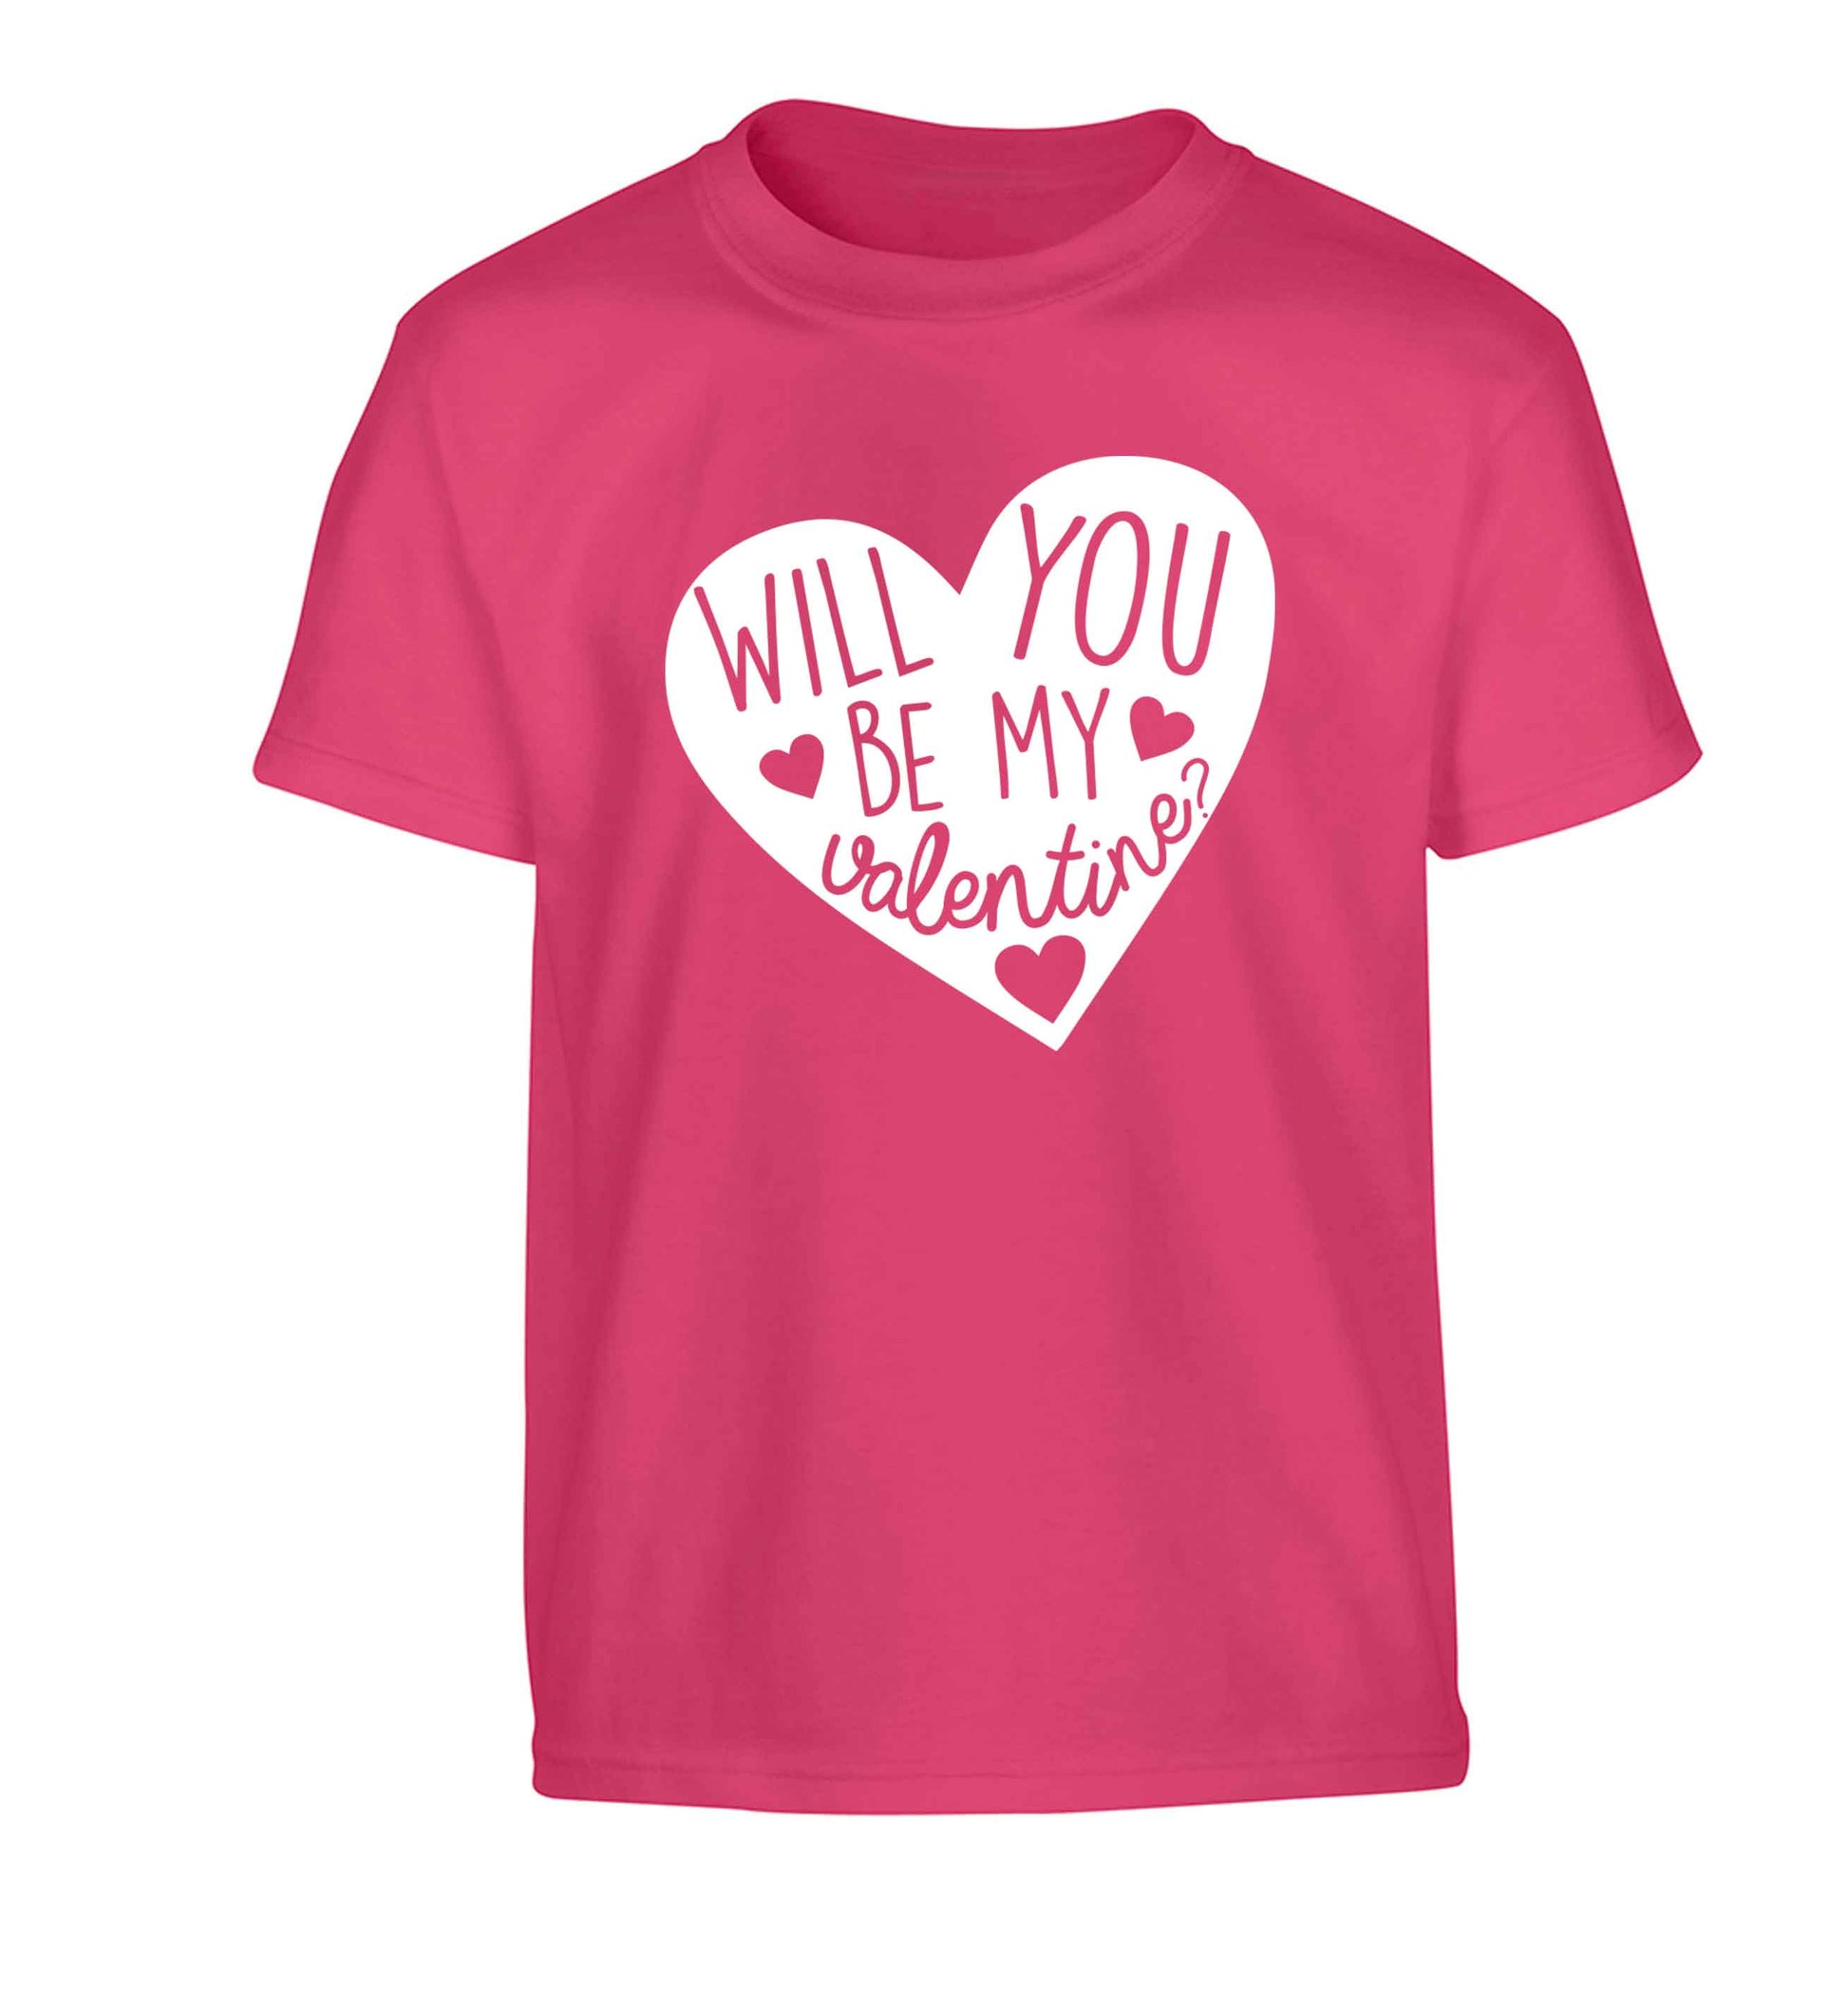 Will you be my valentine? Children's pink Tshirt 12-13 Years